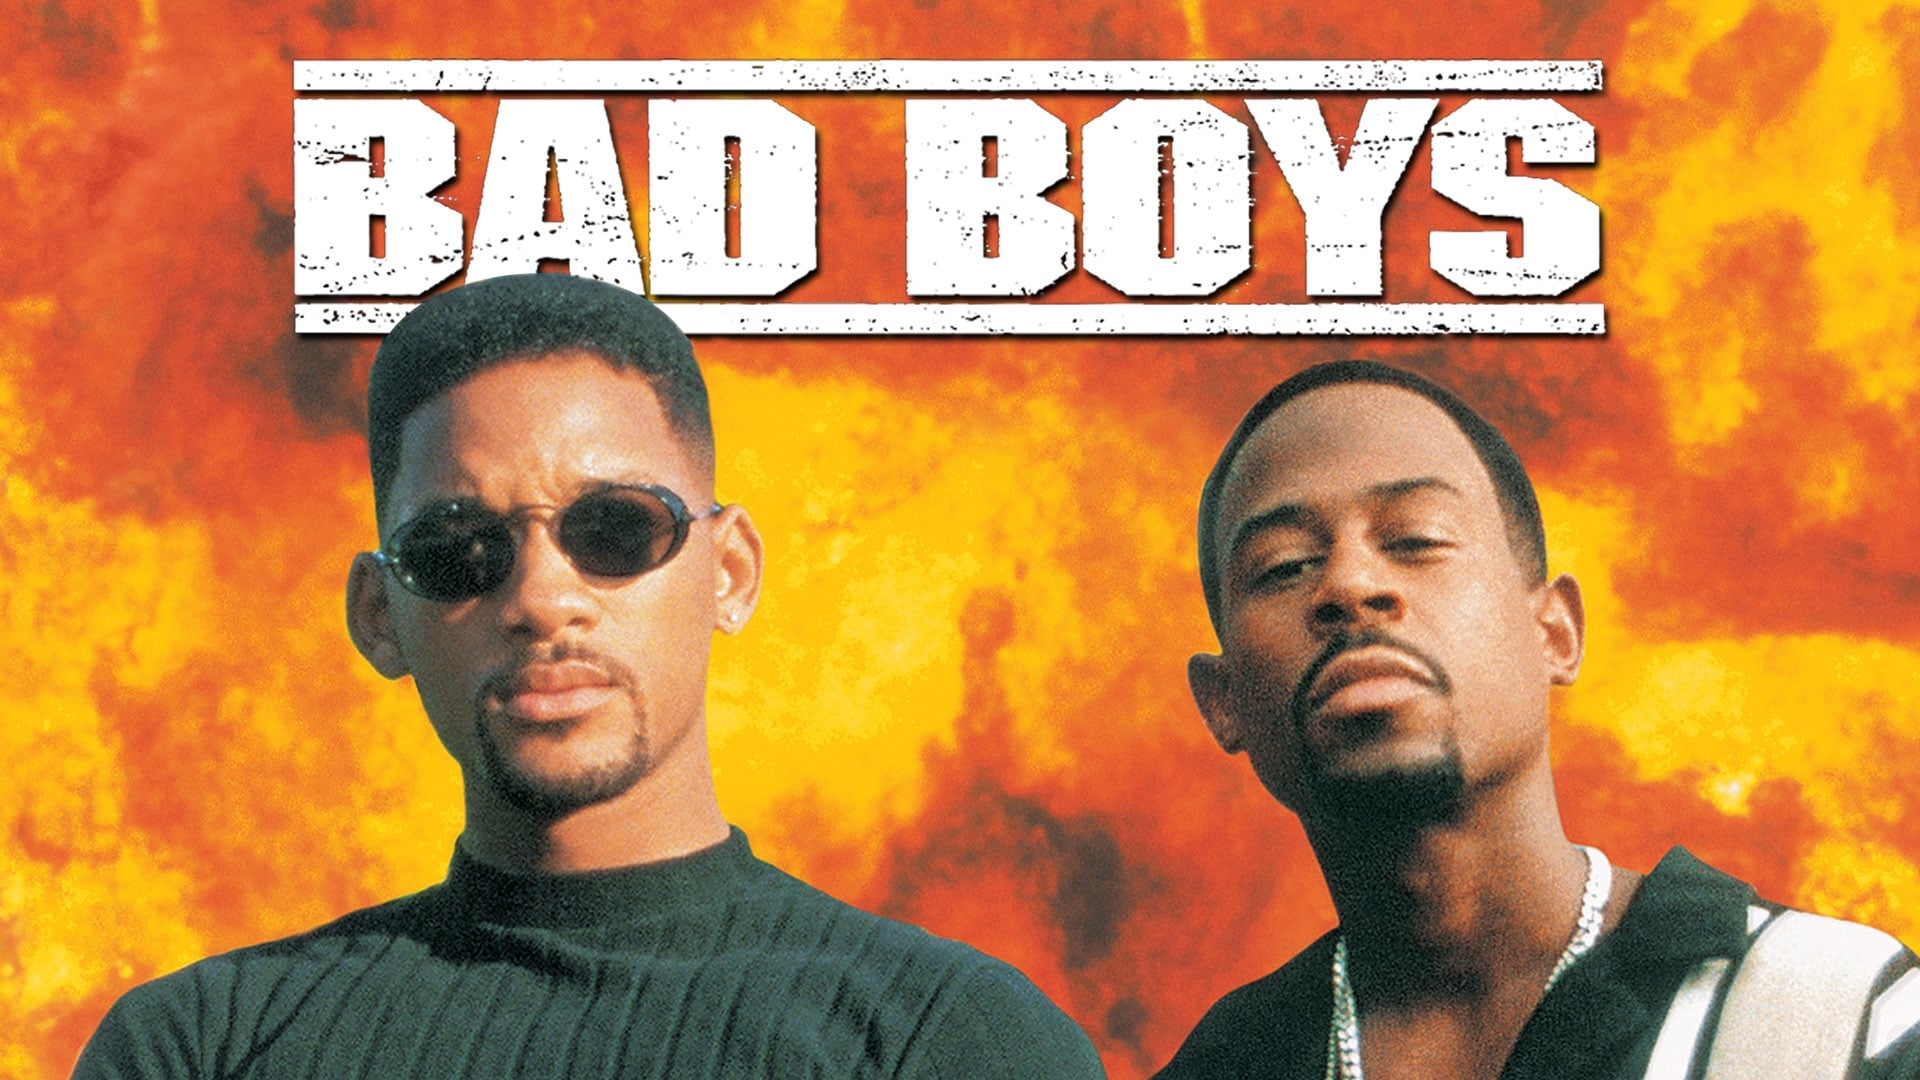 Bad Boys - Harte Jungs (1995)